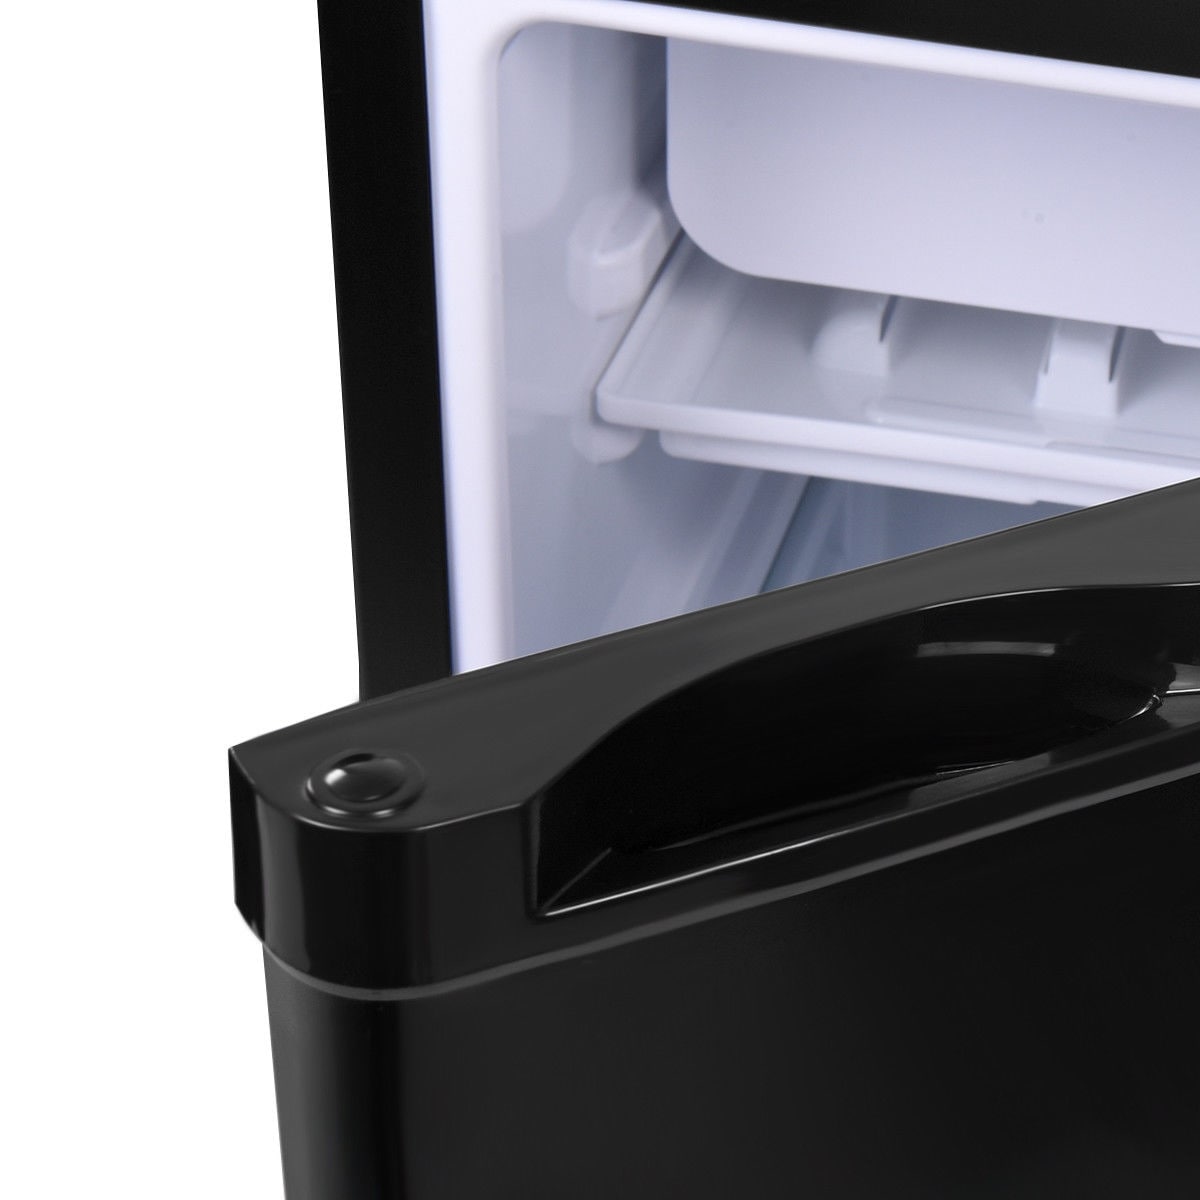  COSTWAY Compact Refrigerator, 3.4 Cu. Ft. Classic Fridge with  Adjustable Removable Glass Shelves, Mechanical Control, Recessed Handle,  Fridge Freezer for Dorm, Office, Apartment, Black : Appliances